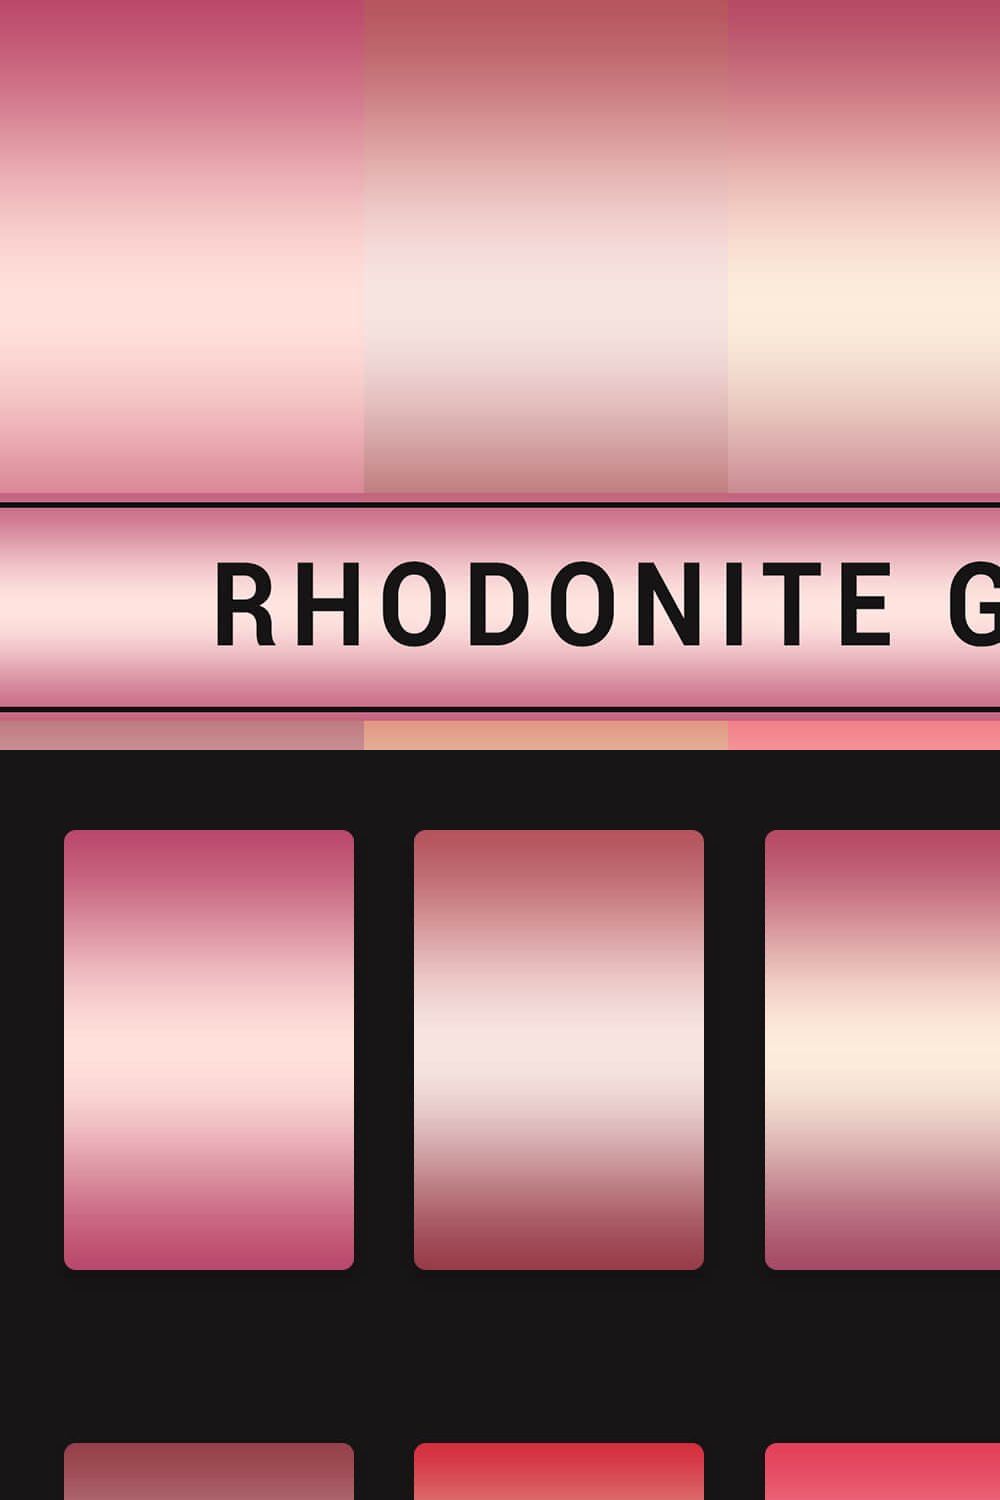 Rhodonite Gradients pinterest preview image.